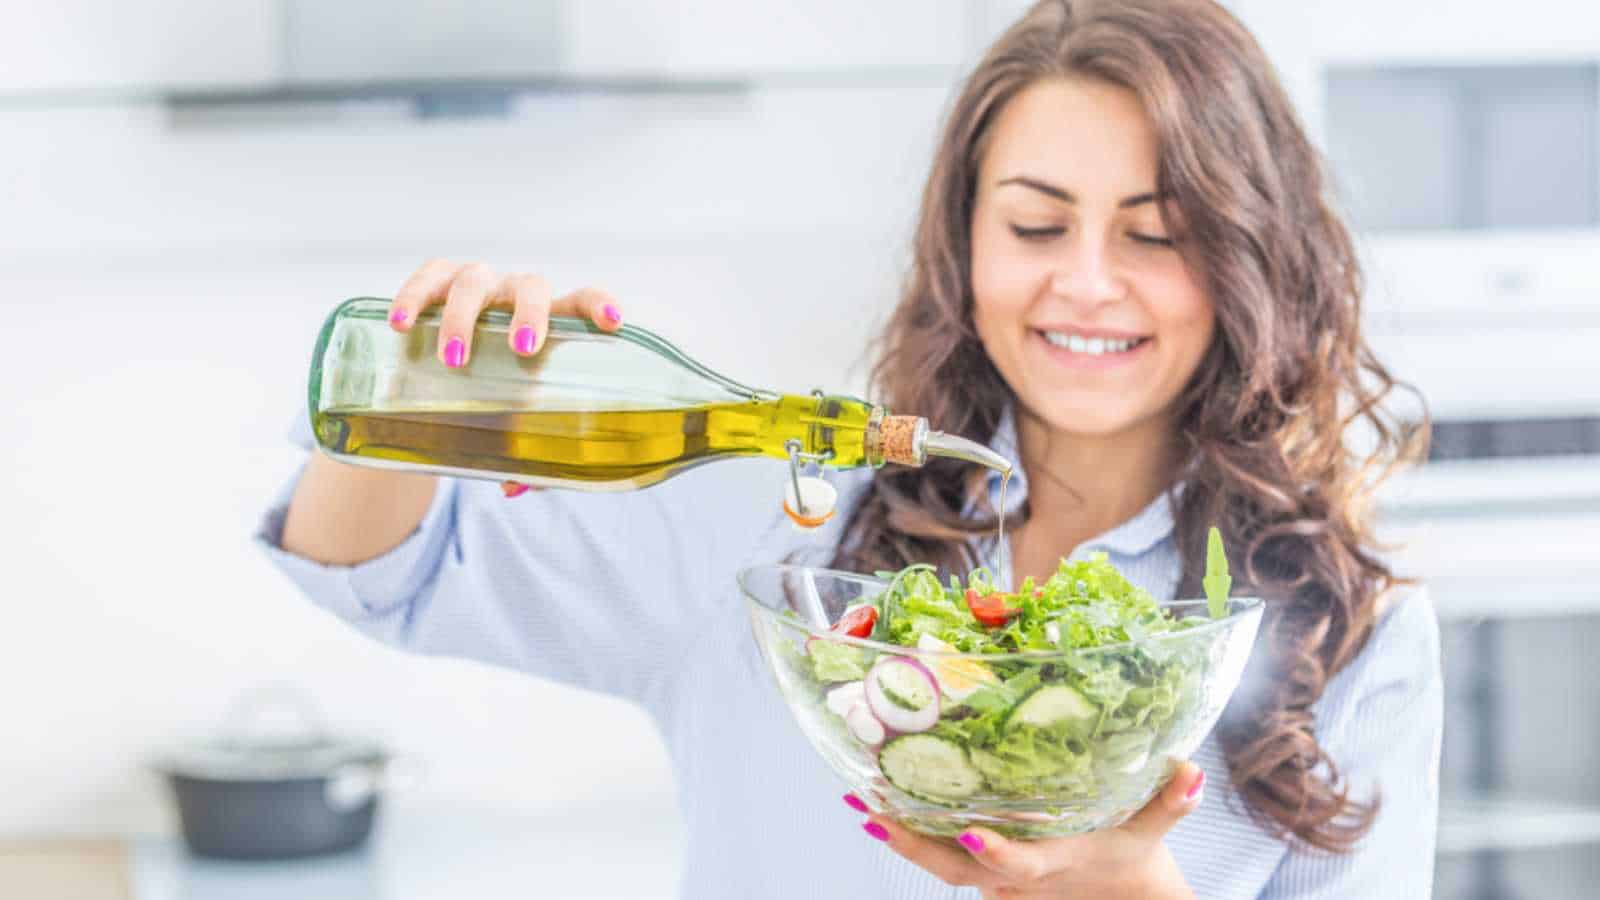 Woman having salad